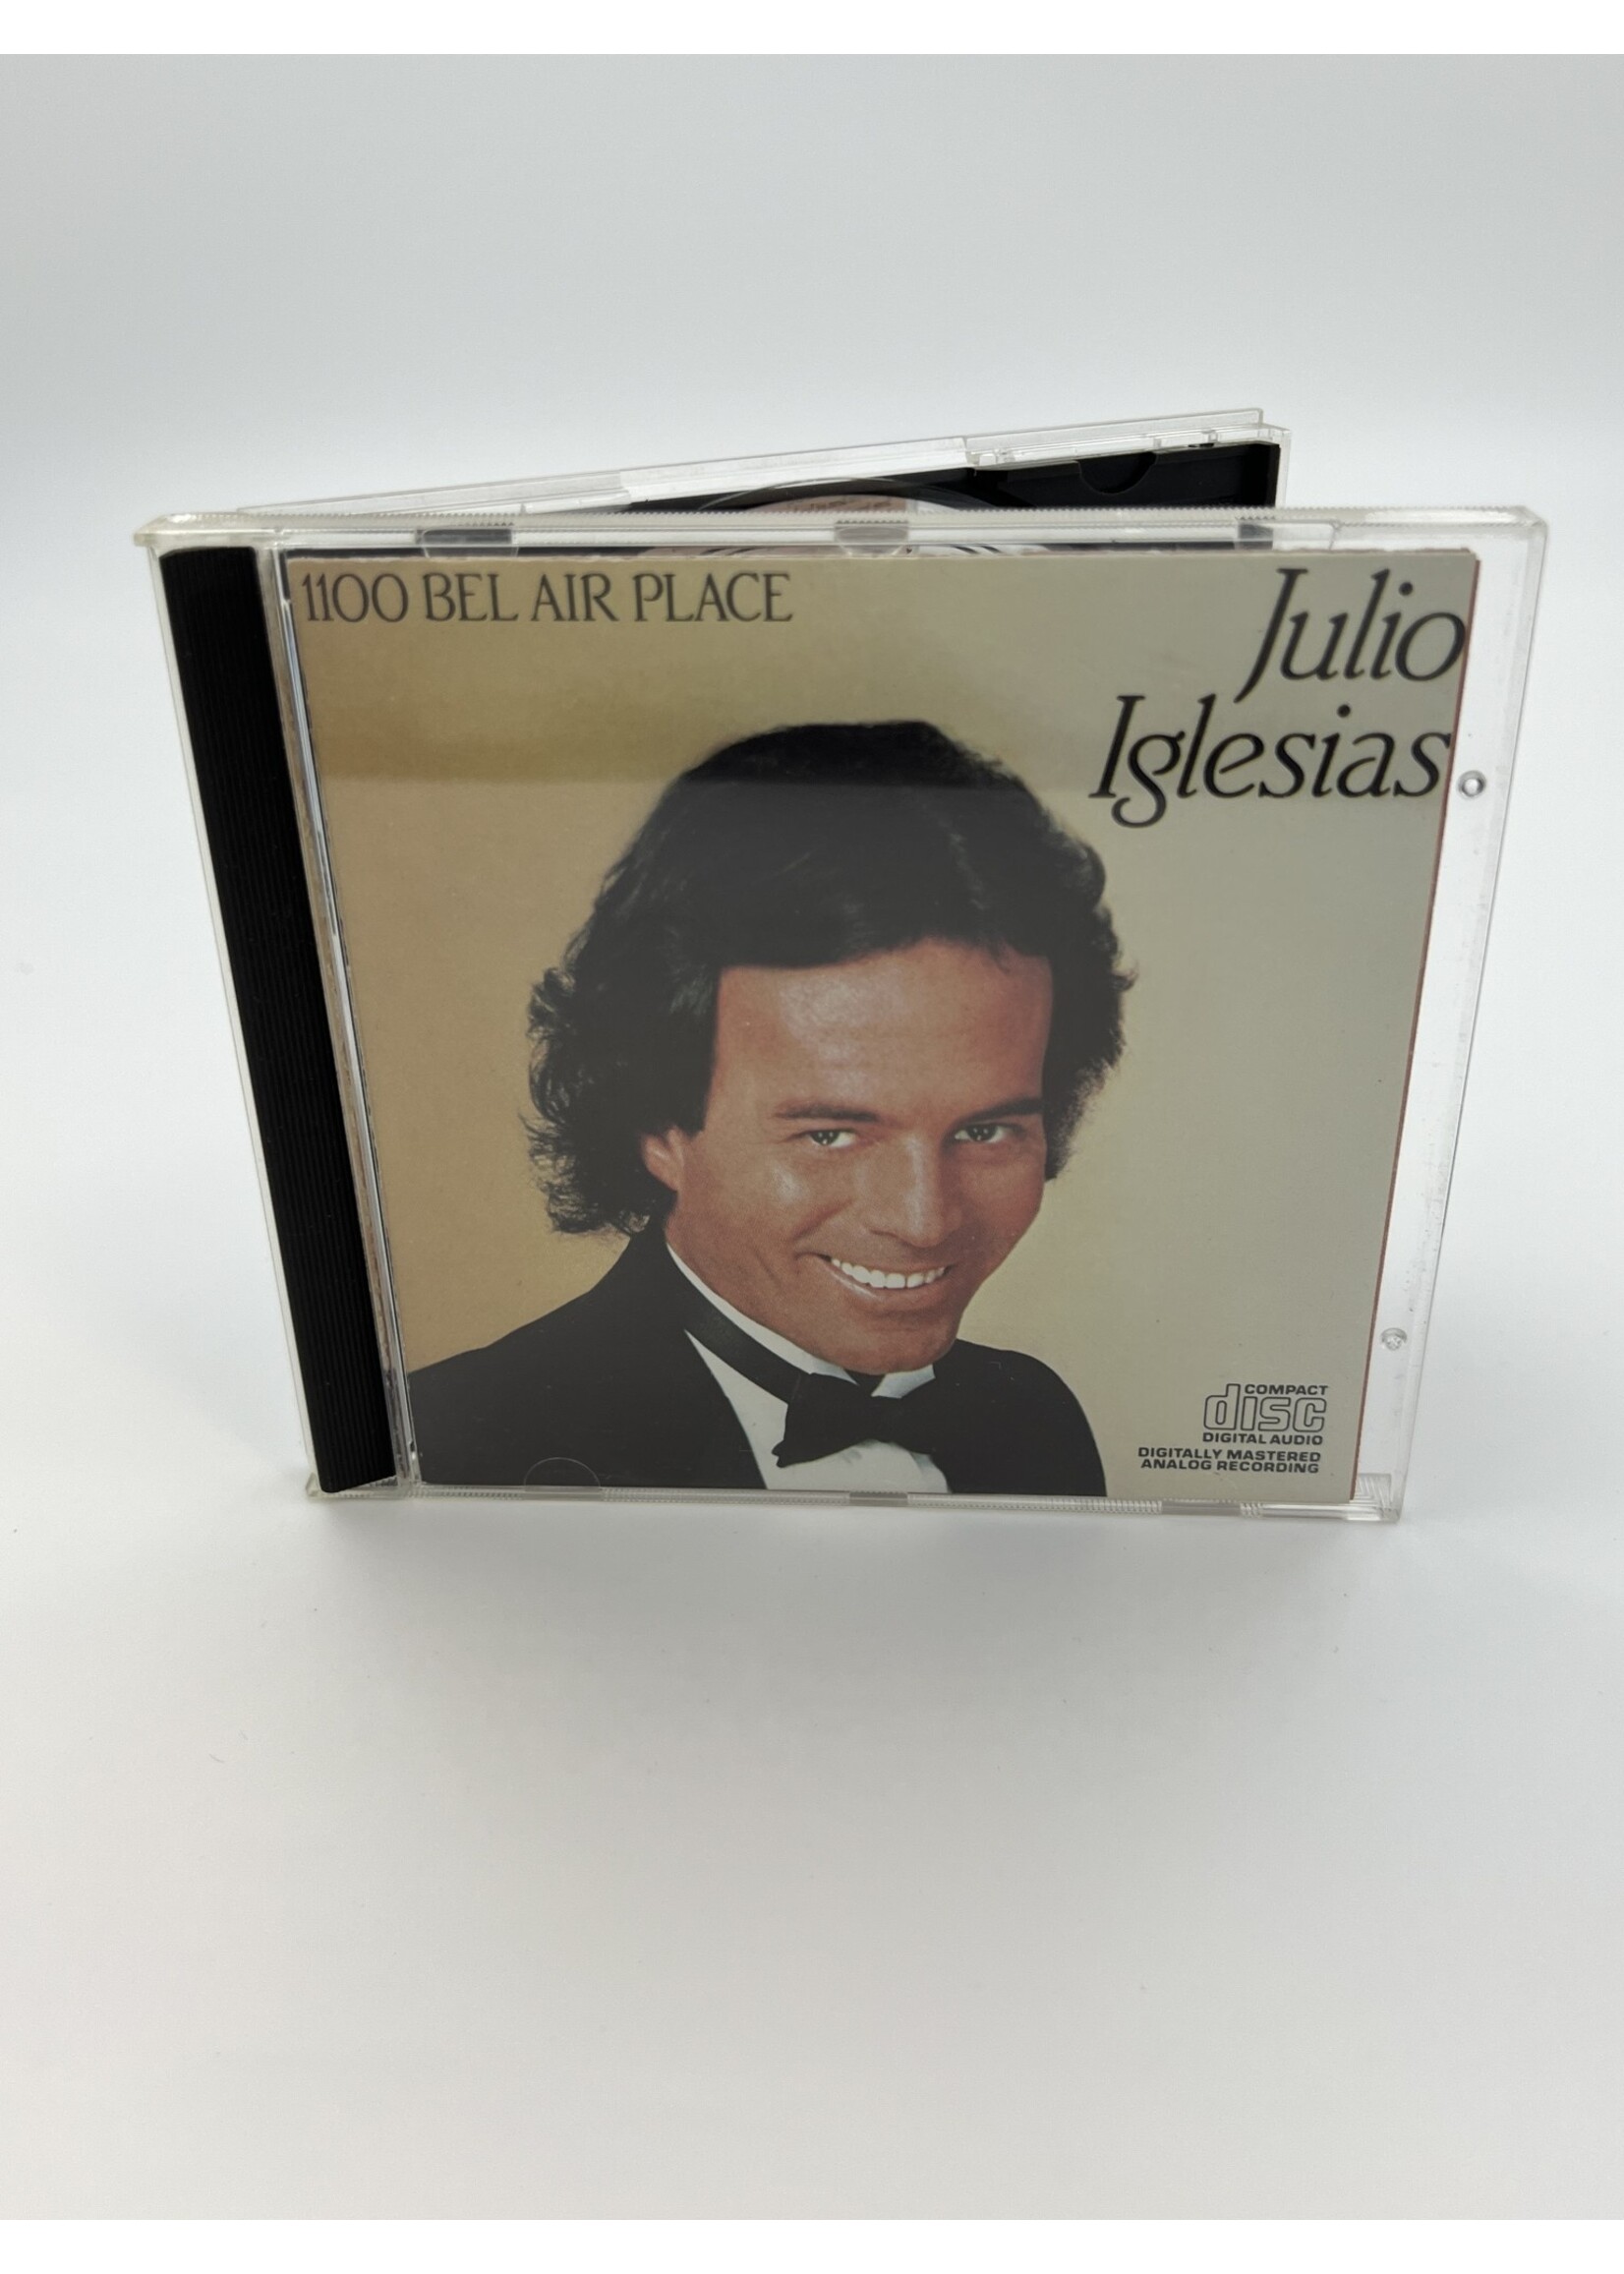 CD Julio Iglesias 1100 Bel Air Place CD